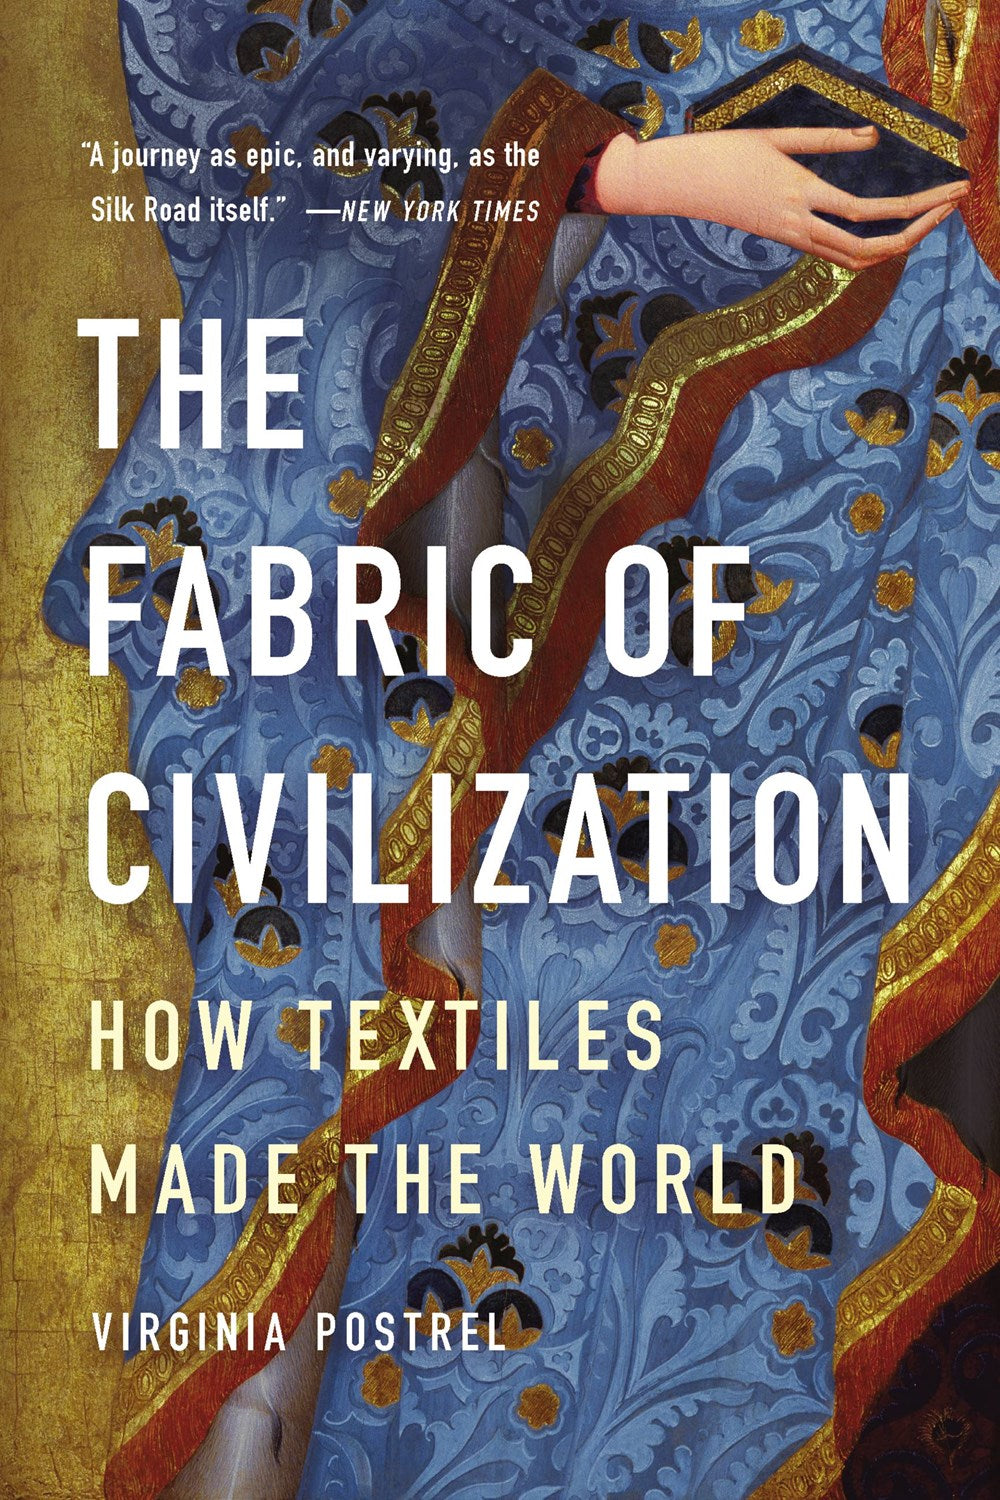 The Fabric of Civilization